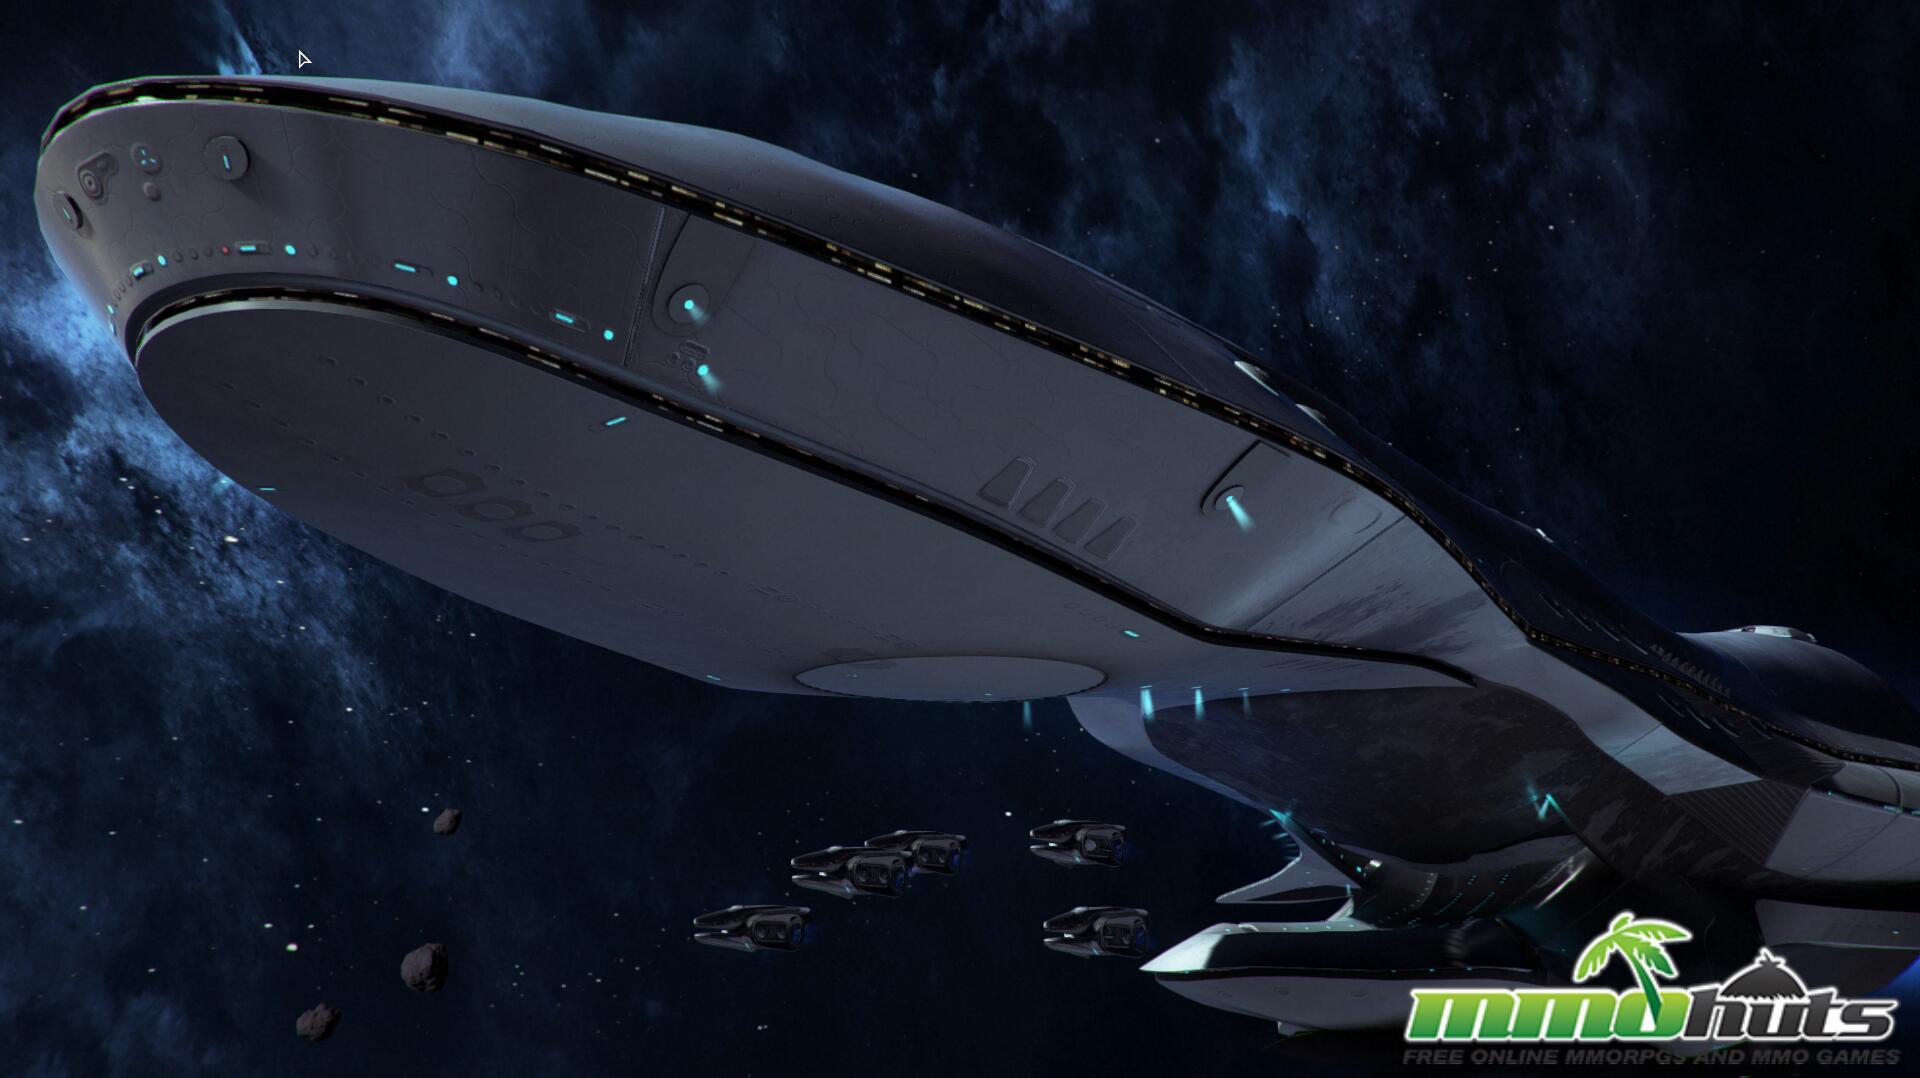 Endless Space 2 - Battle - Sophon Fleet